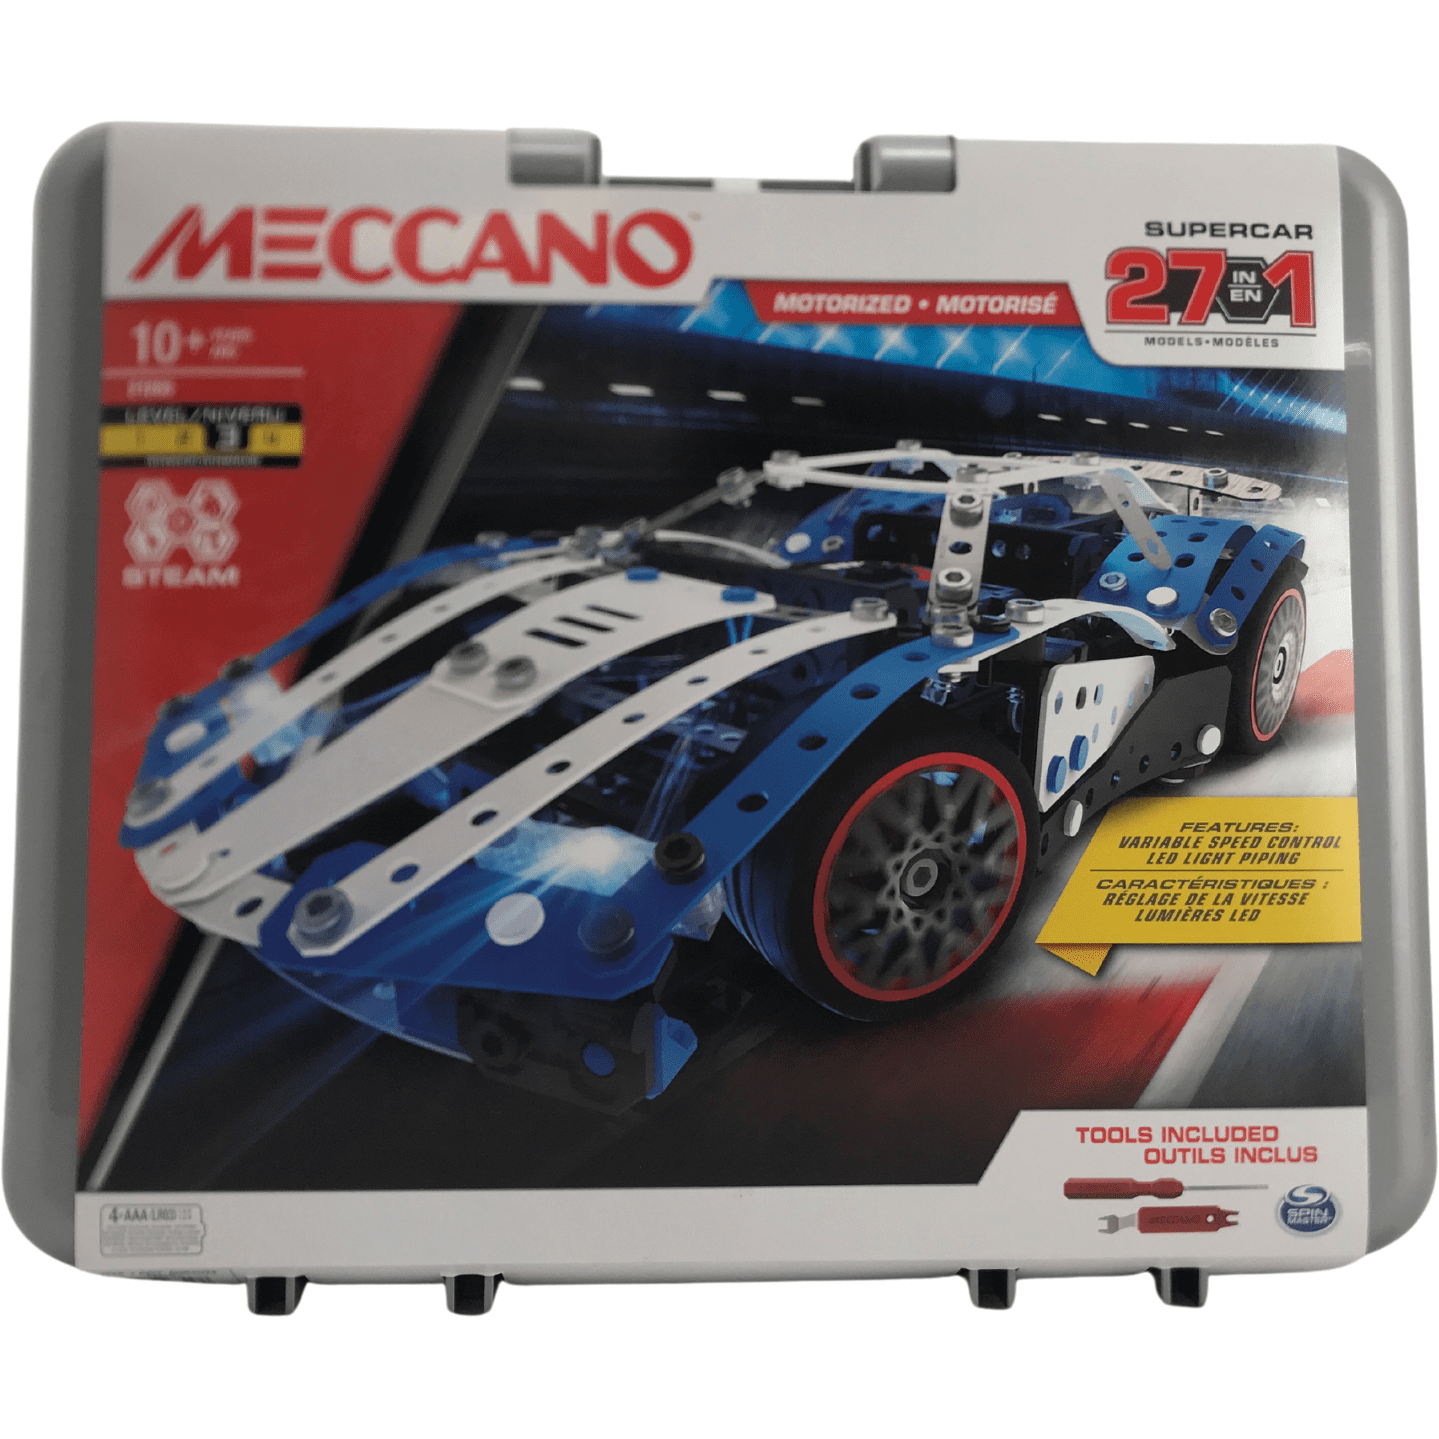 Meccano Supercar Building Model: 21203 / STEAM Toy / Motorized